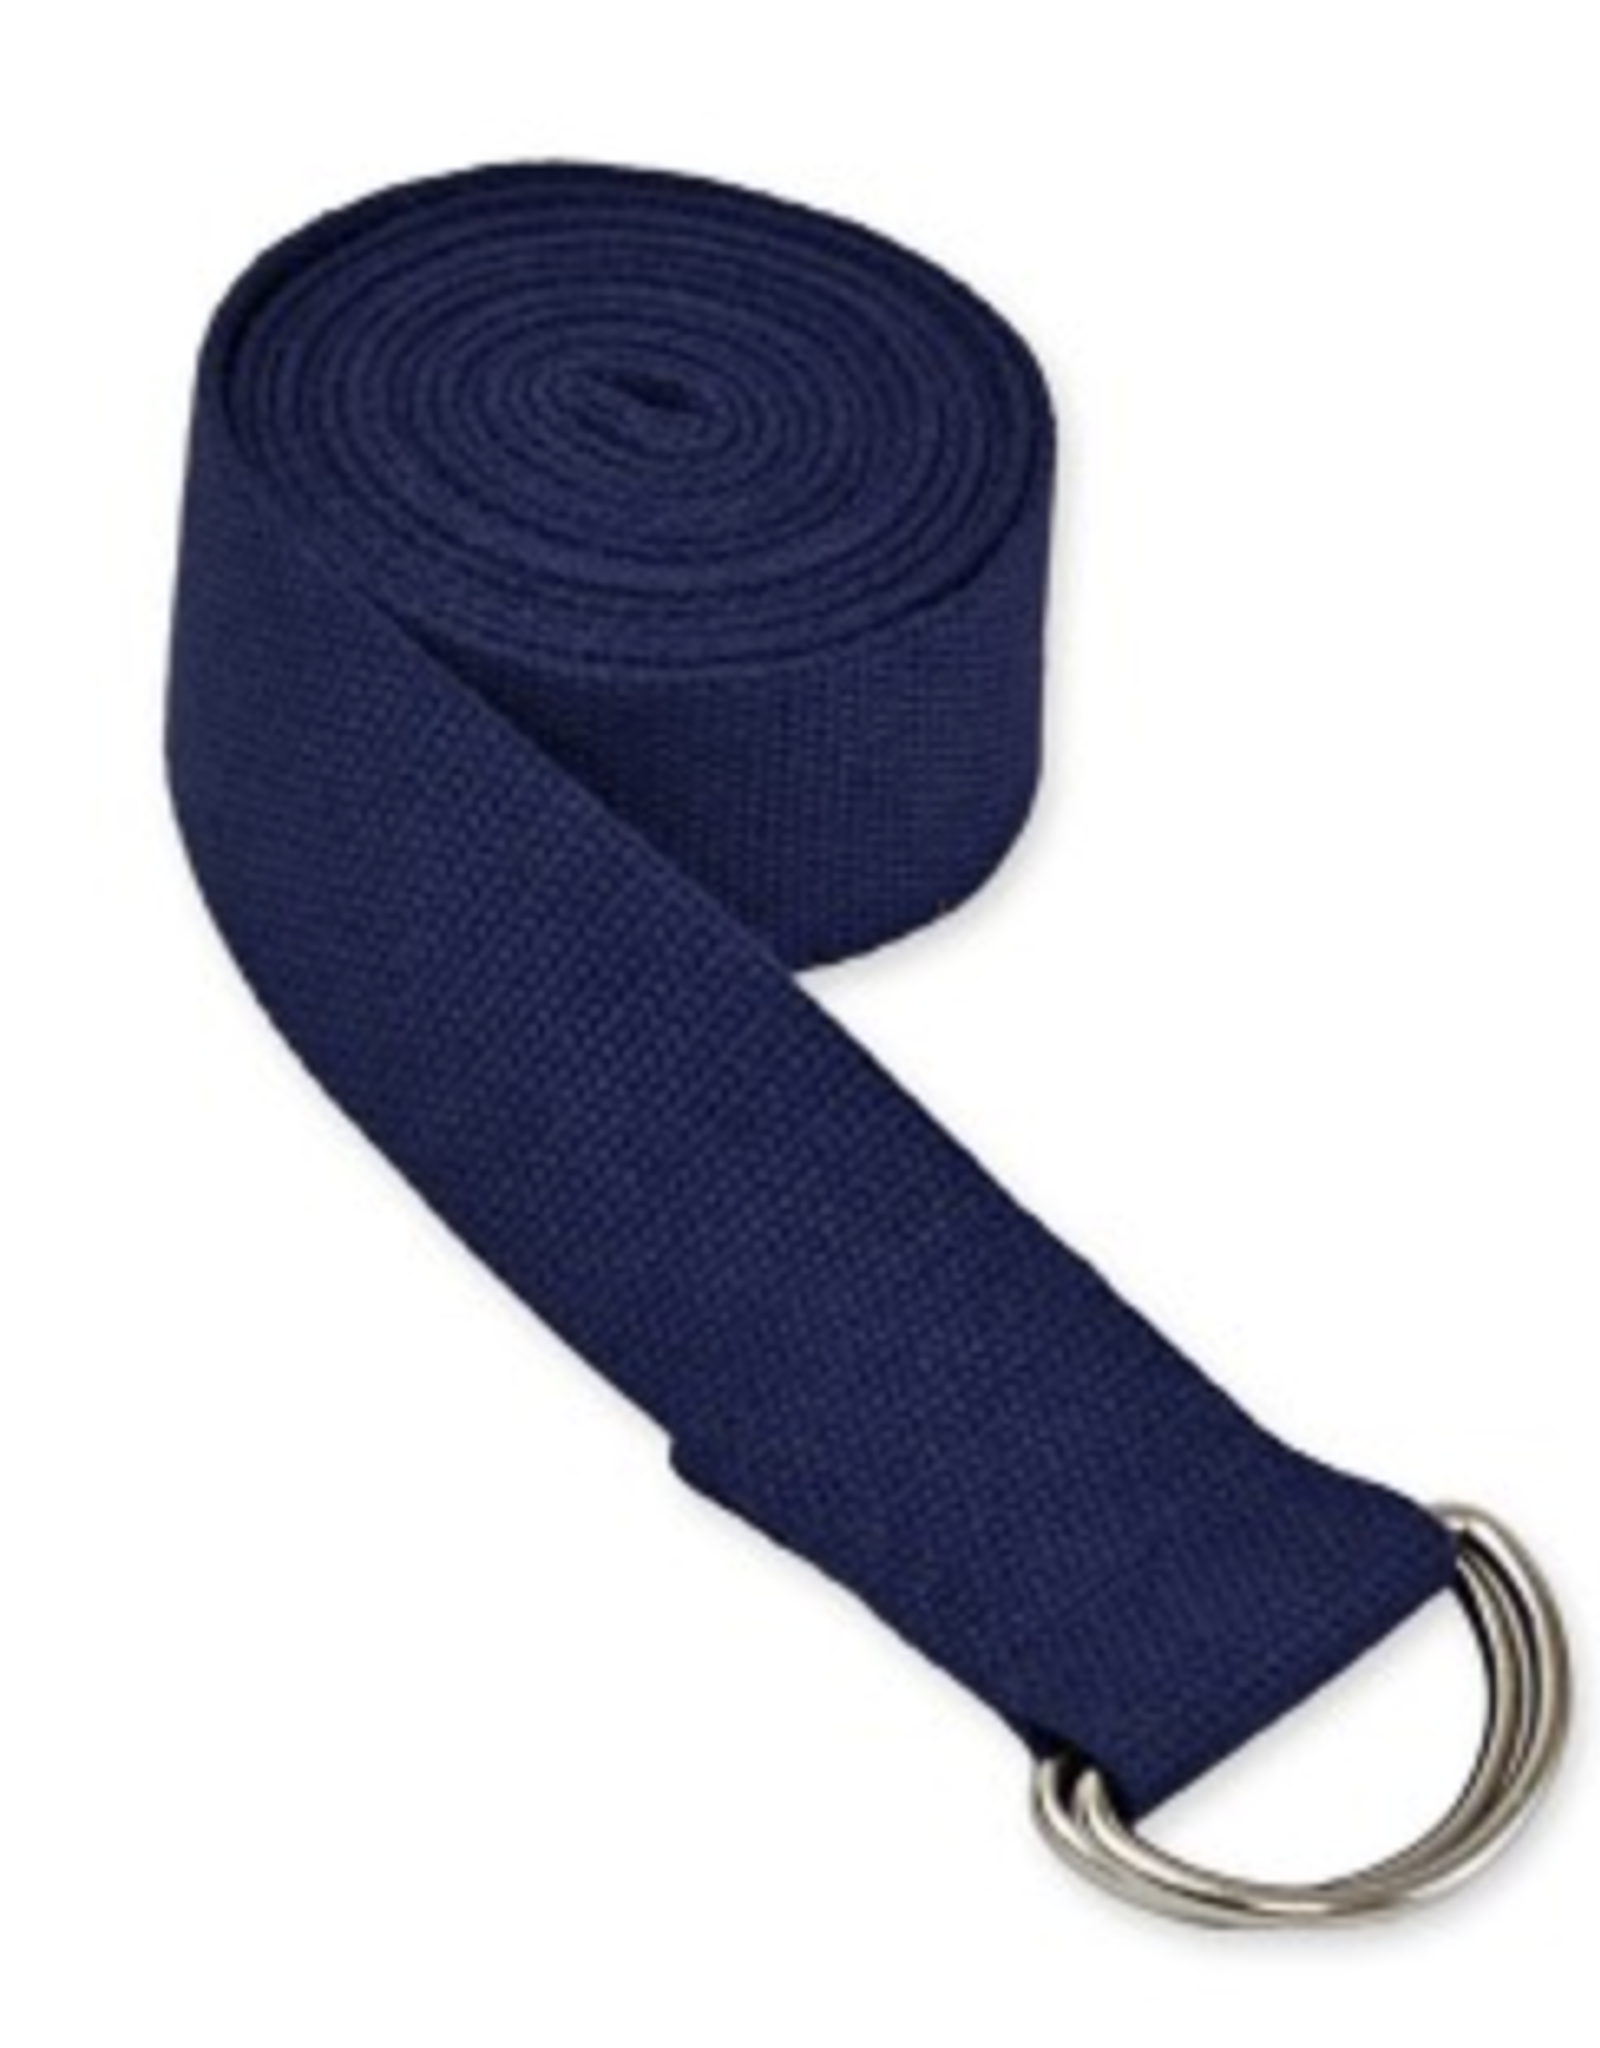 Yoga Accessories 6' D-Ring Yoga Strap - Blue